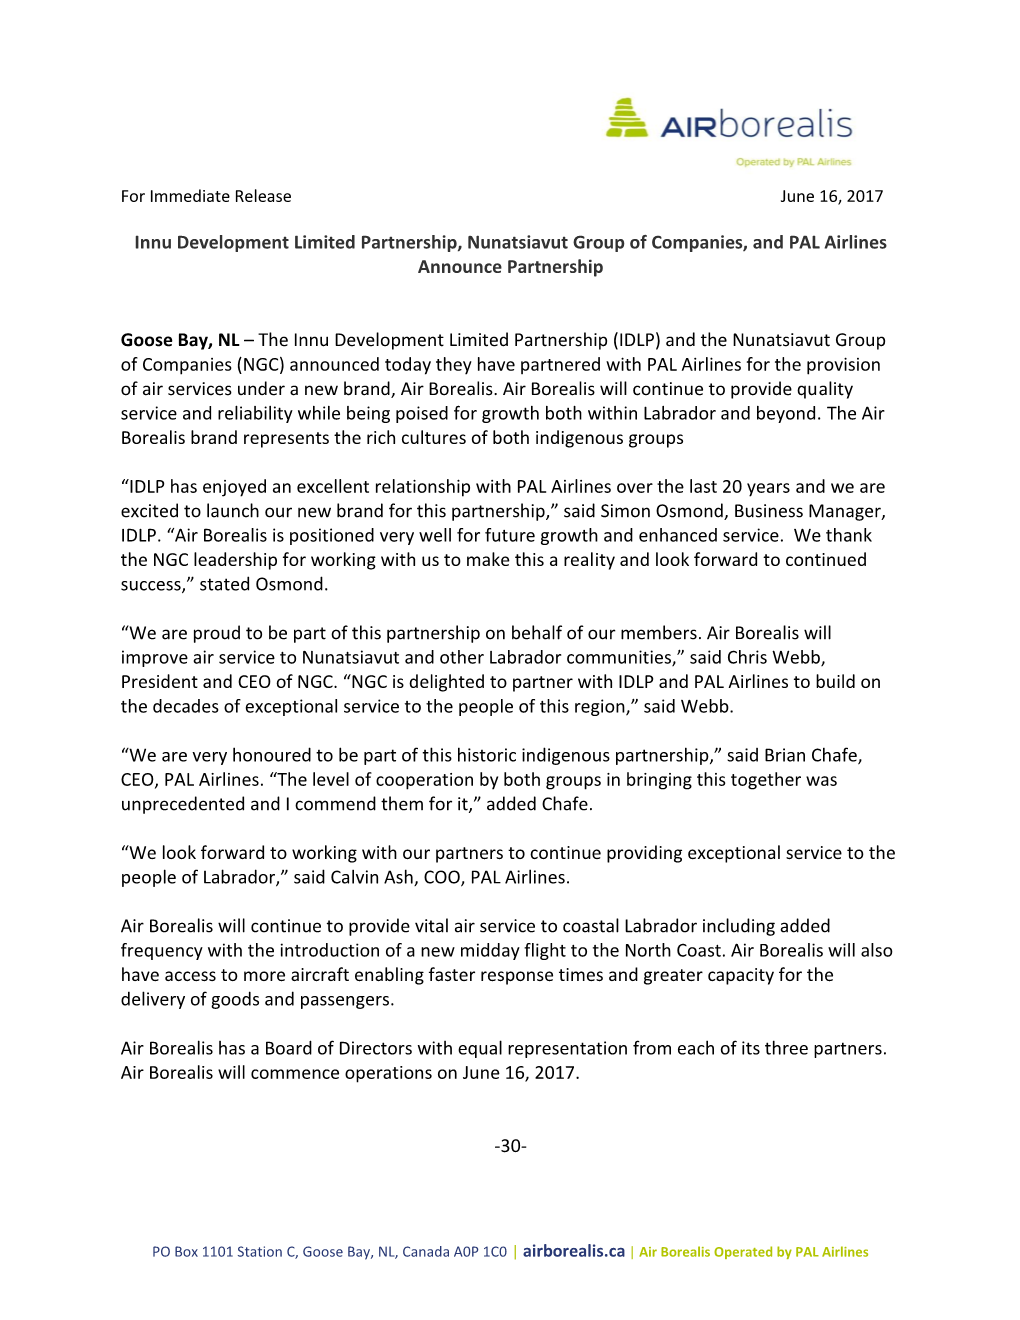 Innu Development Limited Partnership, Nunatsiavut Group of Companies, and PAL Airlines Announce Partnership